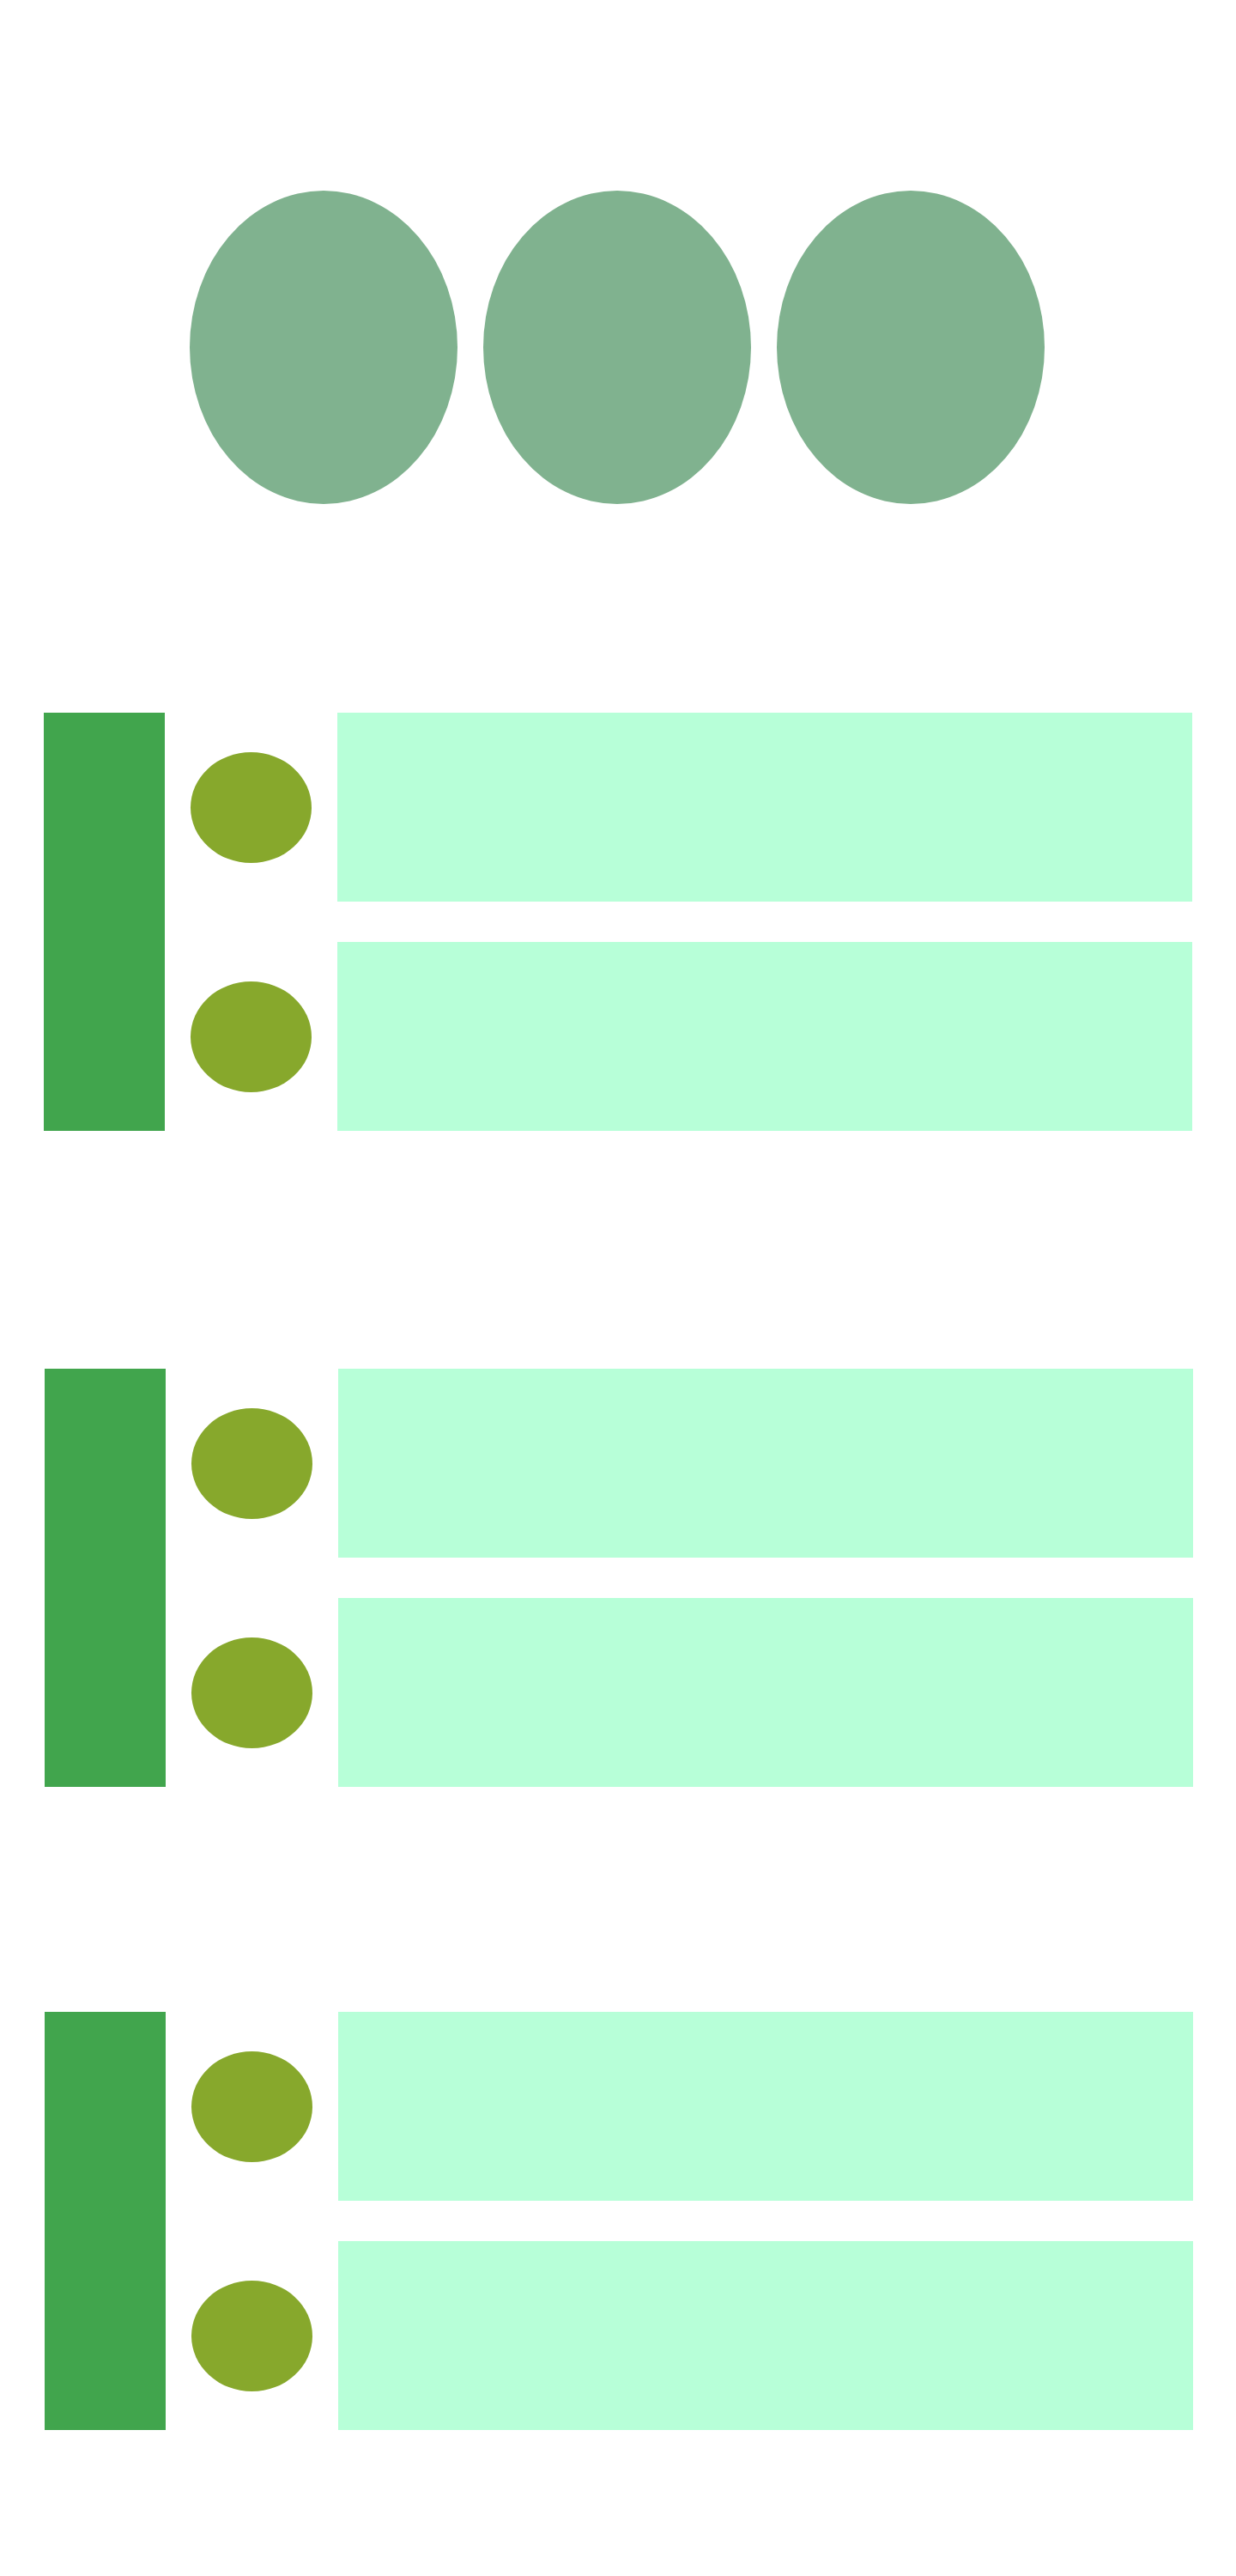 green grid